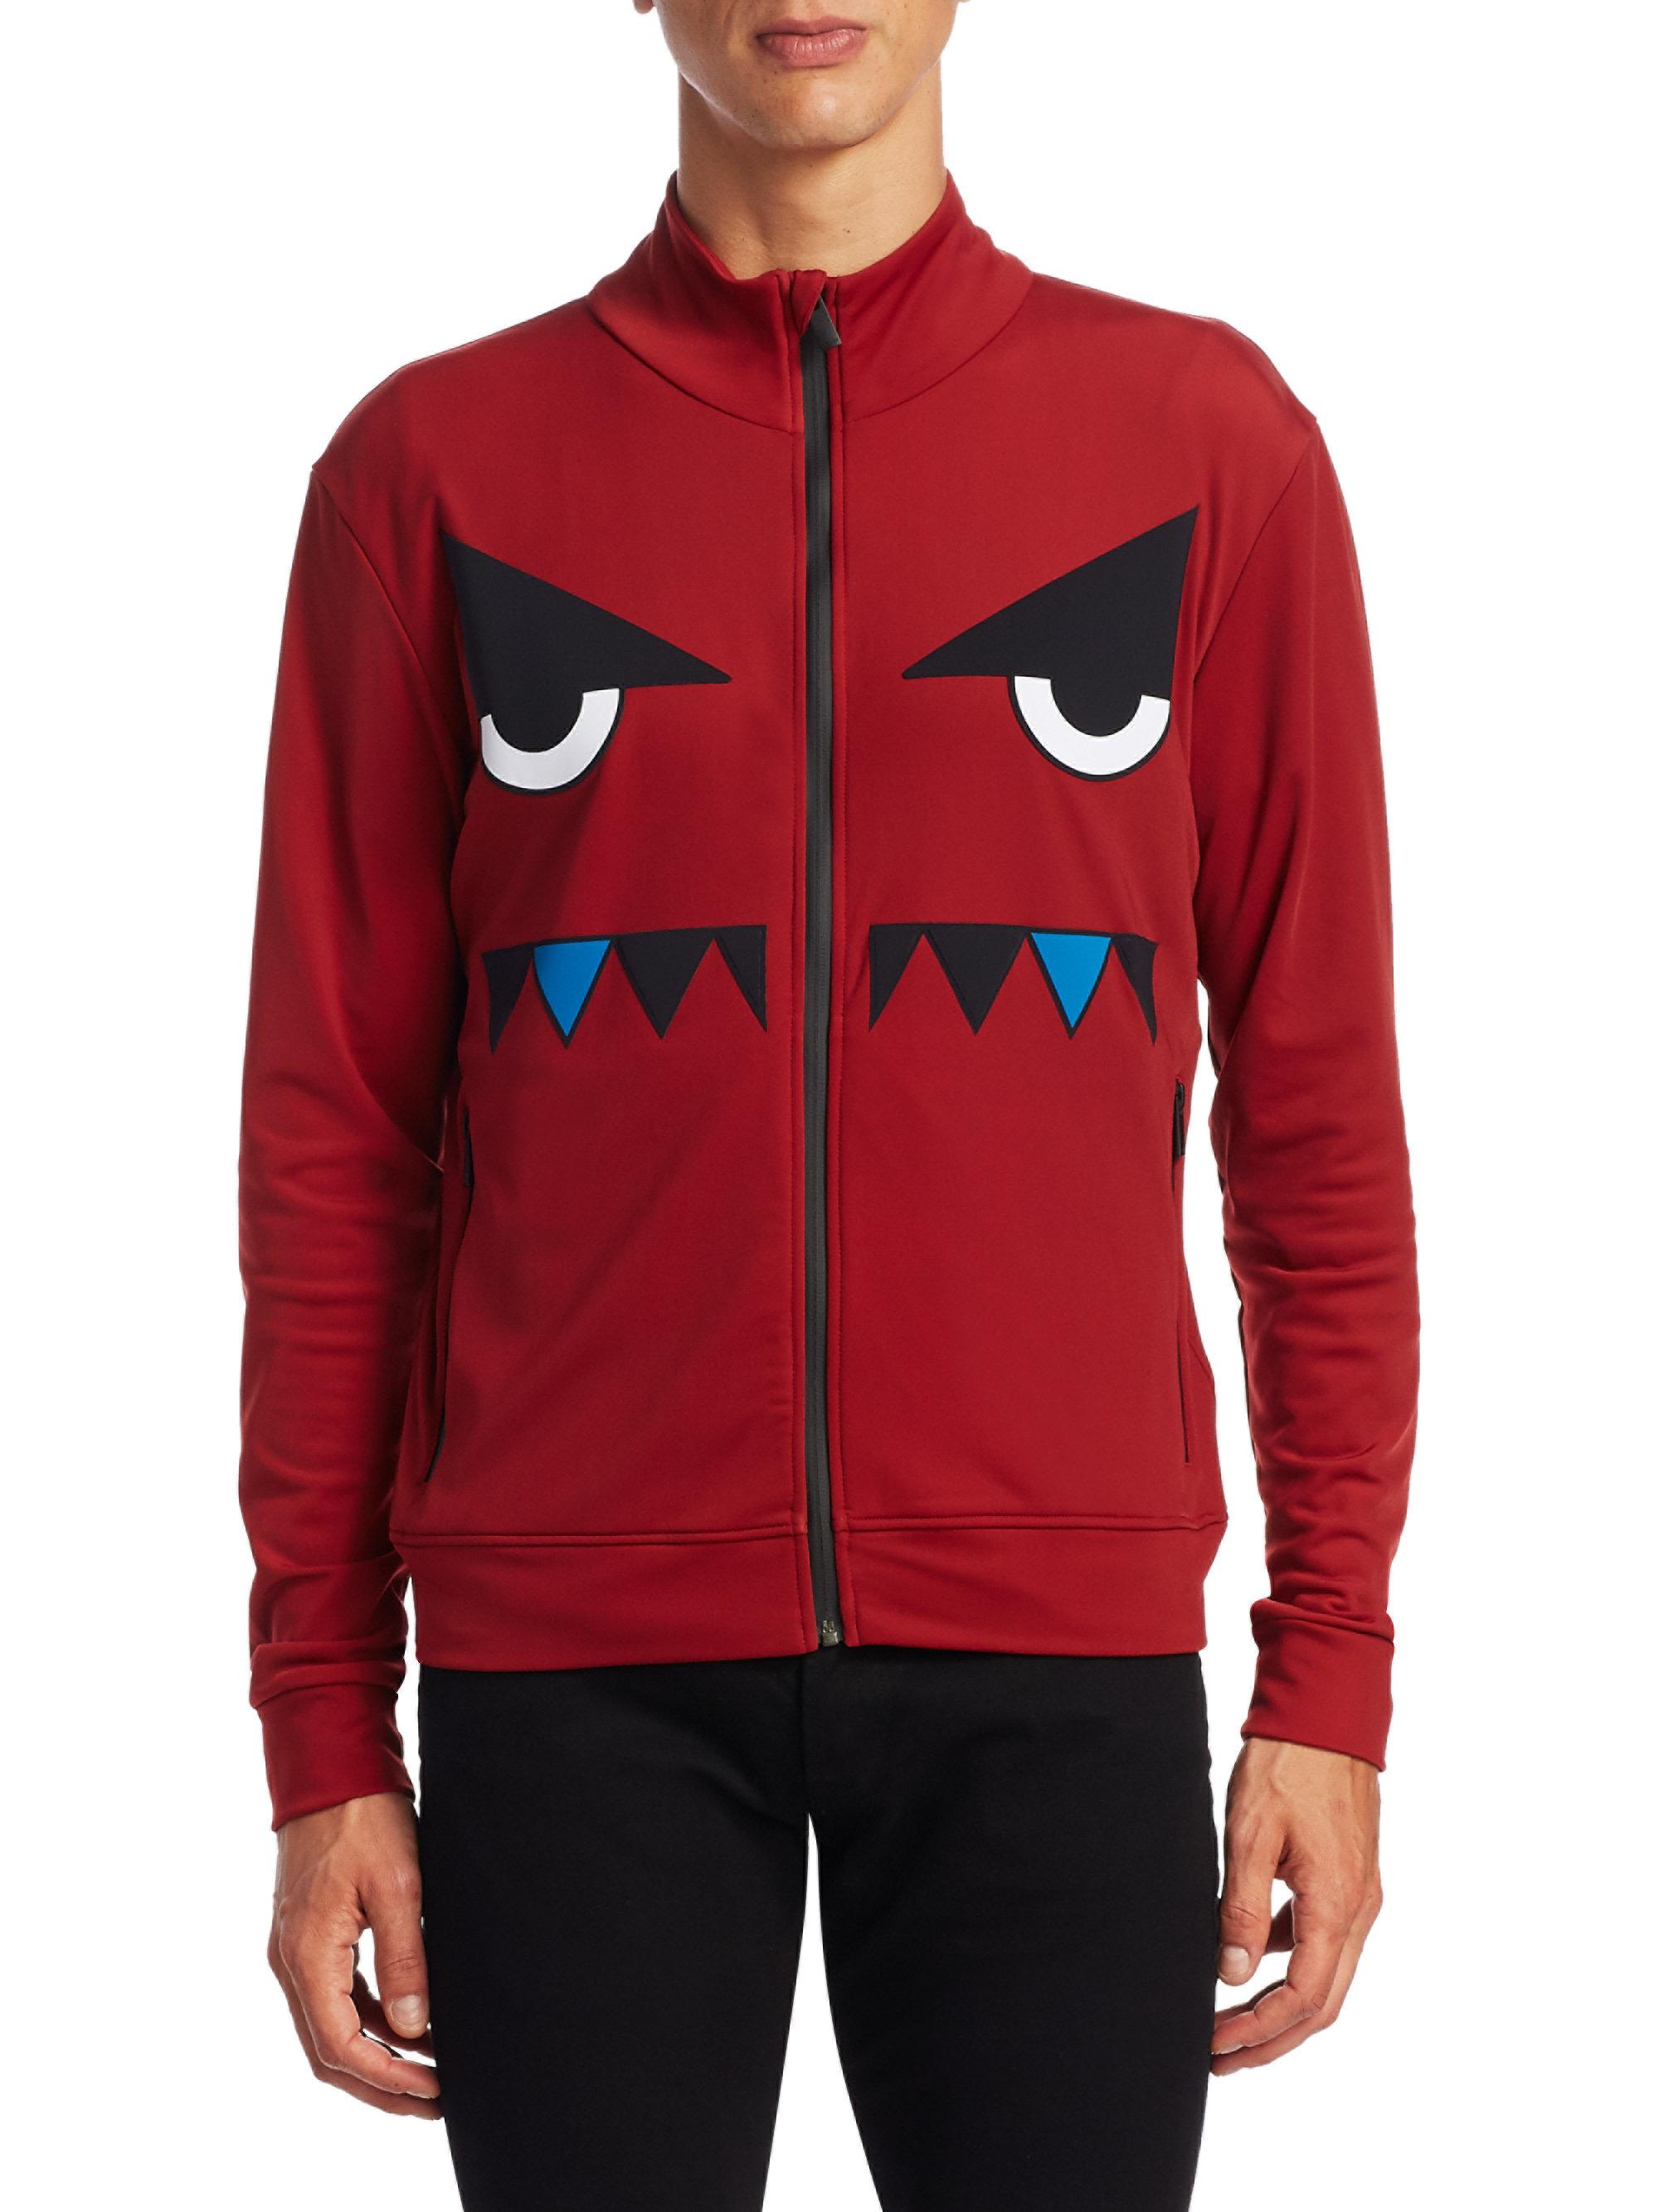 Fendi Synthetic Monster Face Sweatshirt in Red for Men - Lyst